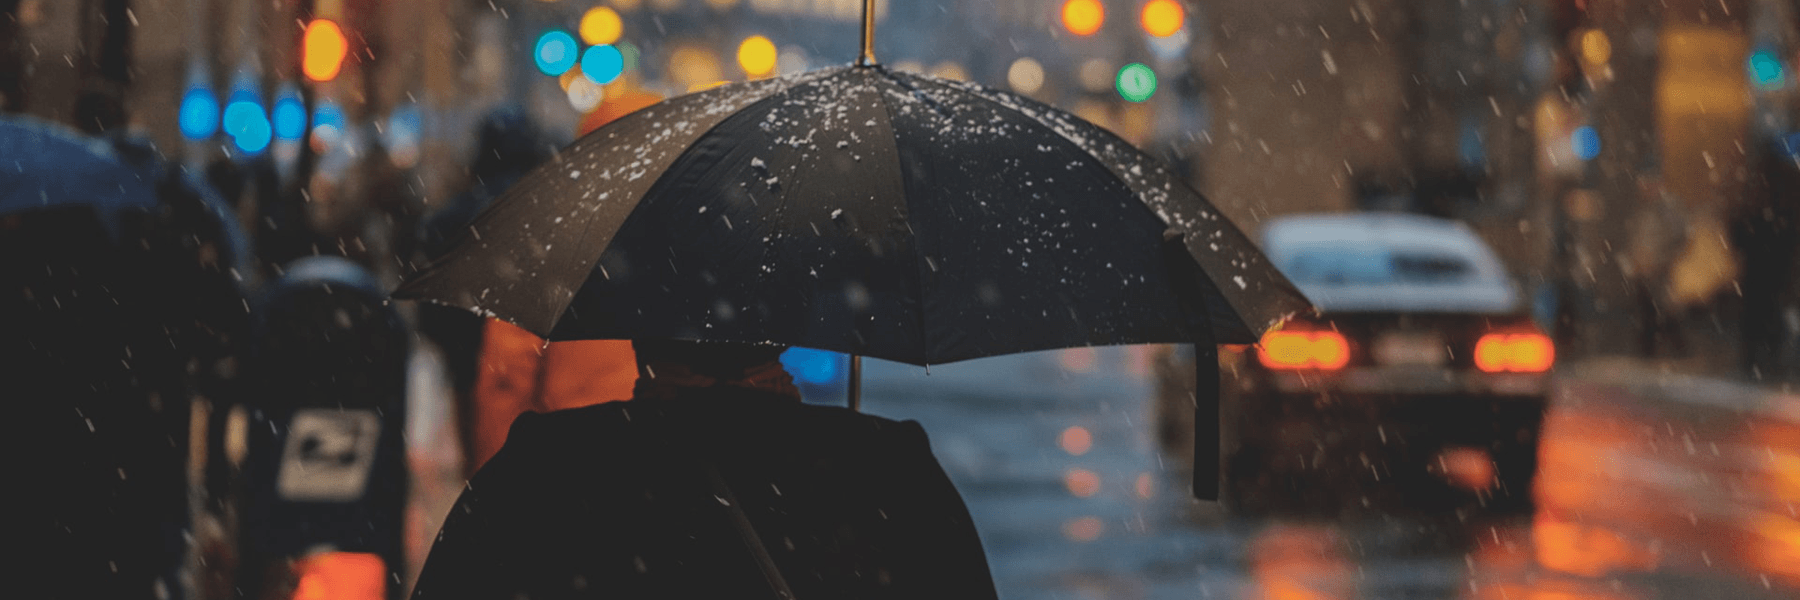 A person walking with an umbrella on a rainy city sreet. Photo courtesy Osman Rana on Unsplash.com